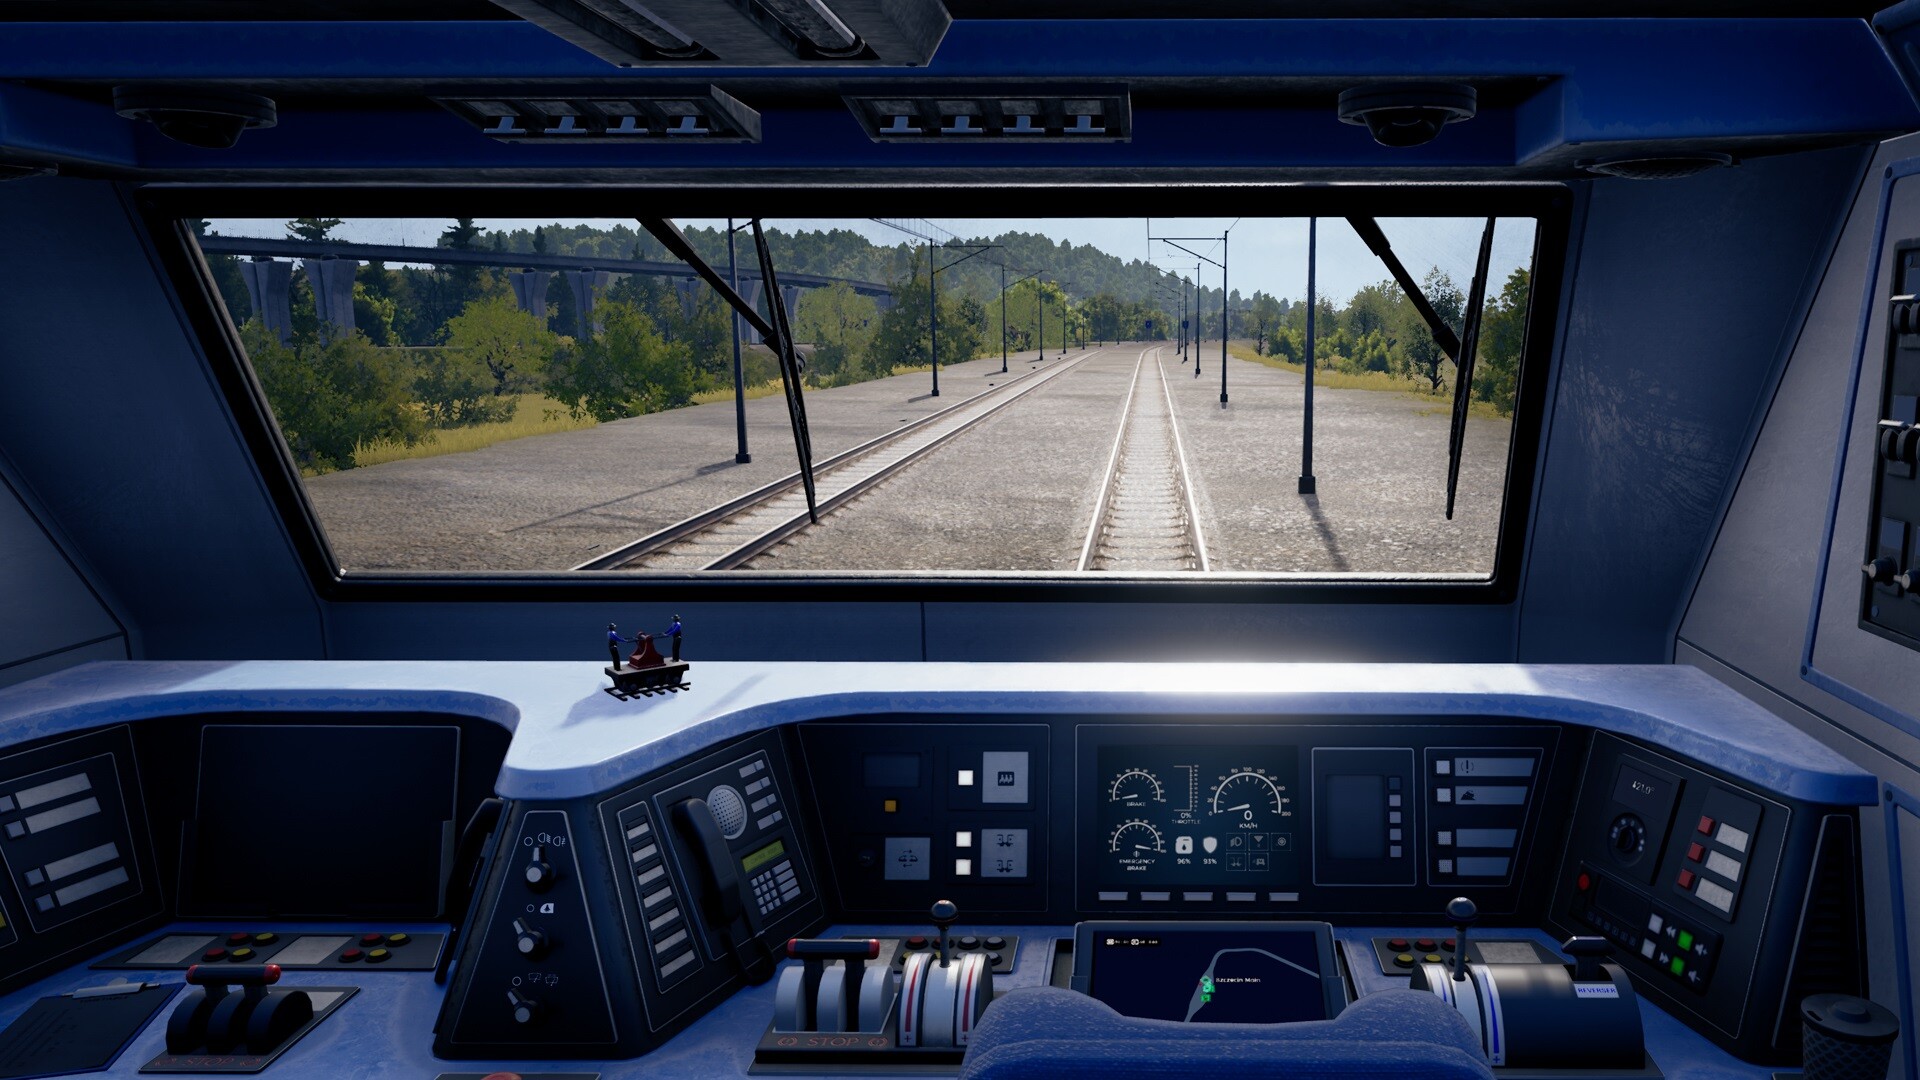 Train Life: A Railway Simulator - Supporter Pack DLC Steam CD Key 1.63 $